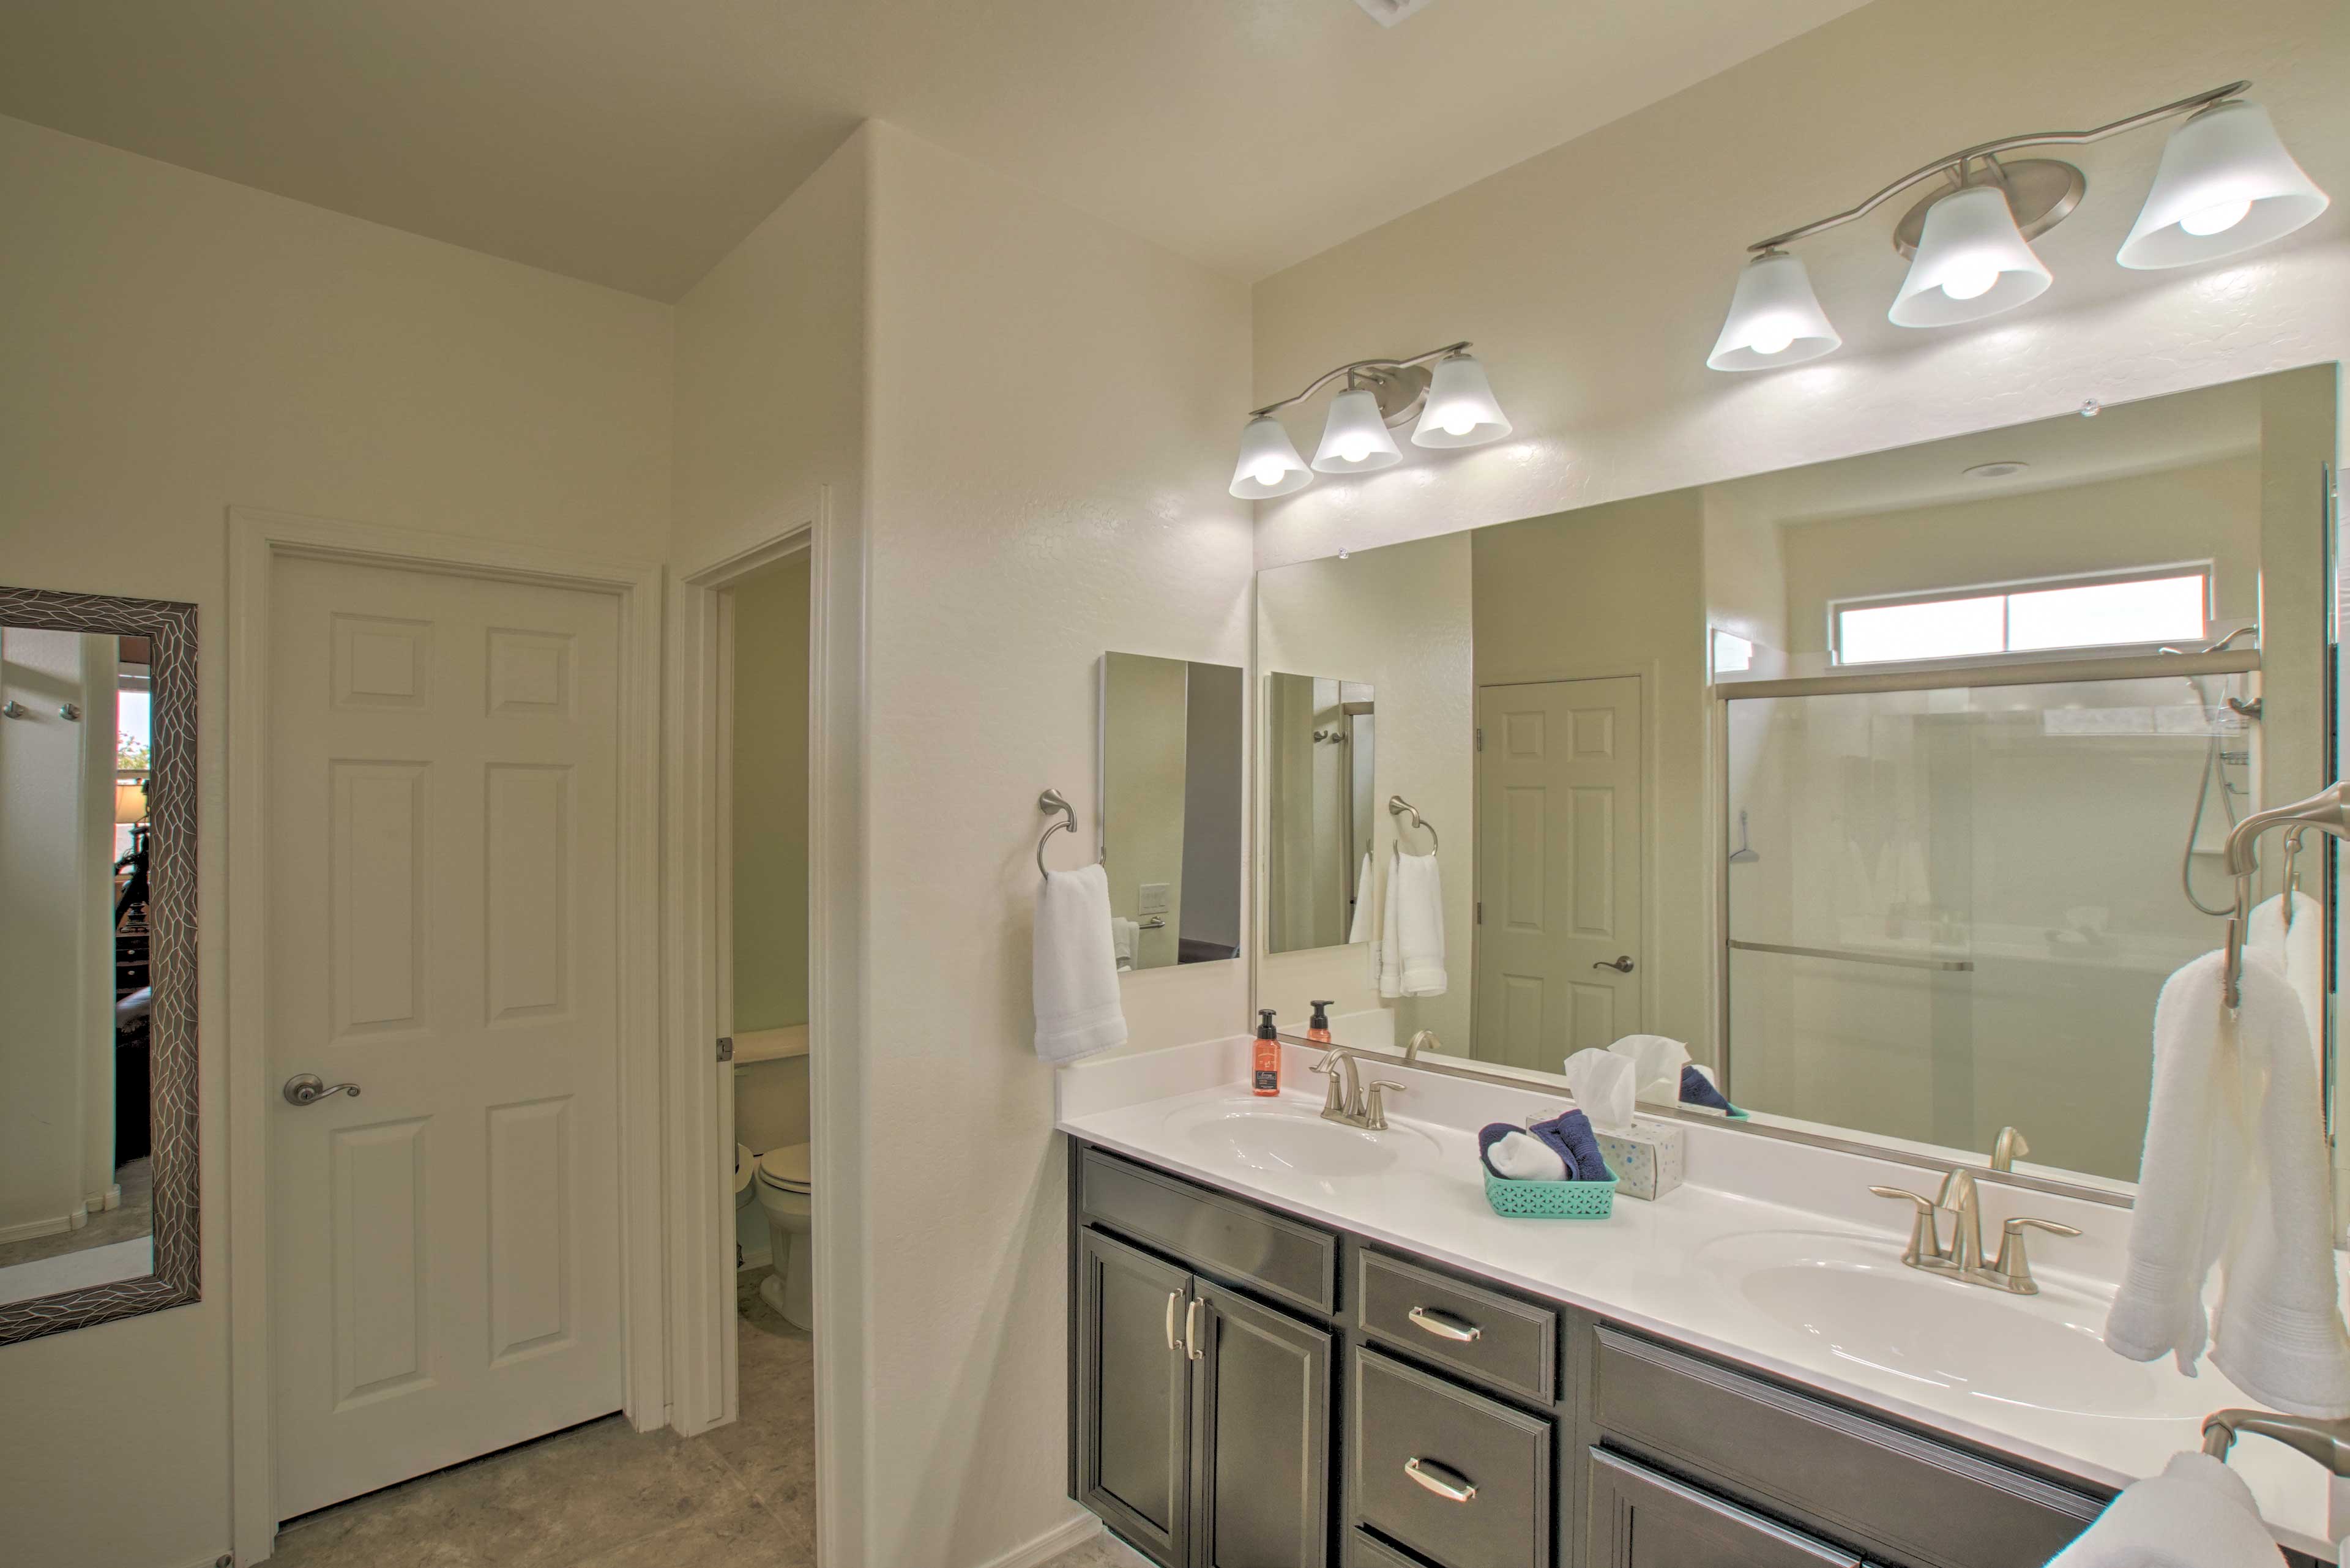 You'll love the convenience of an en-suite bathroom.